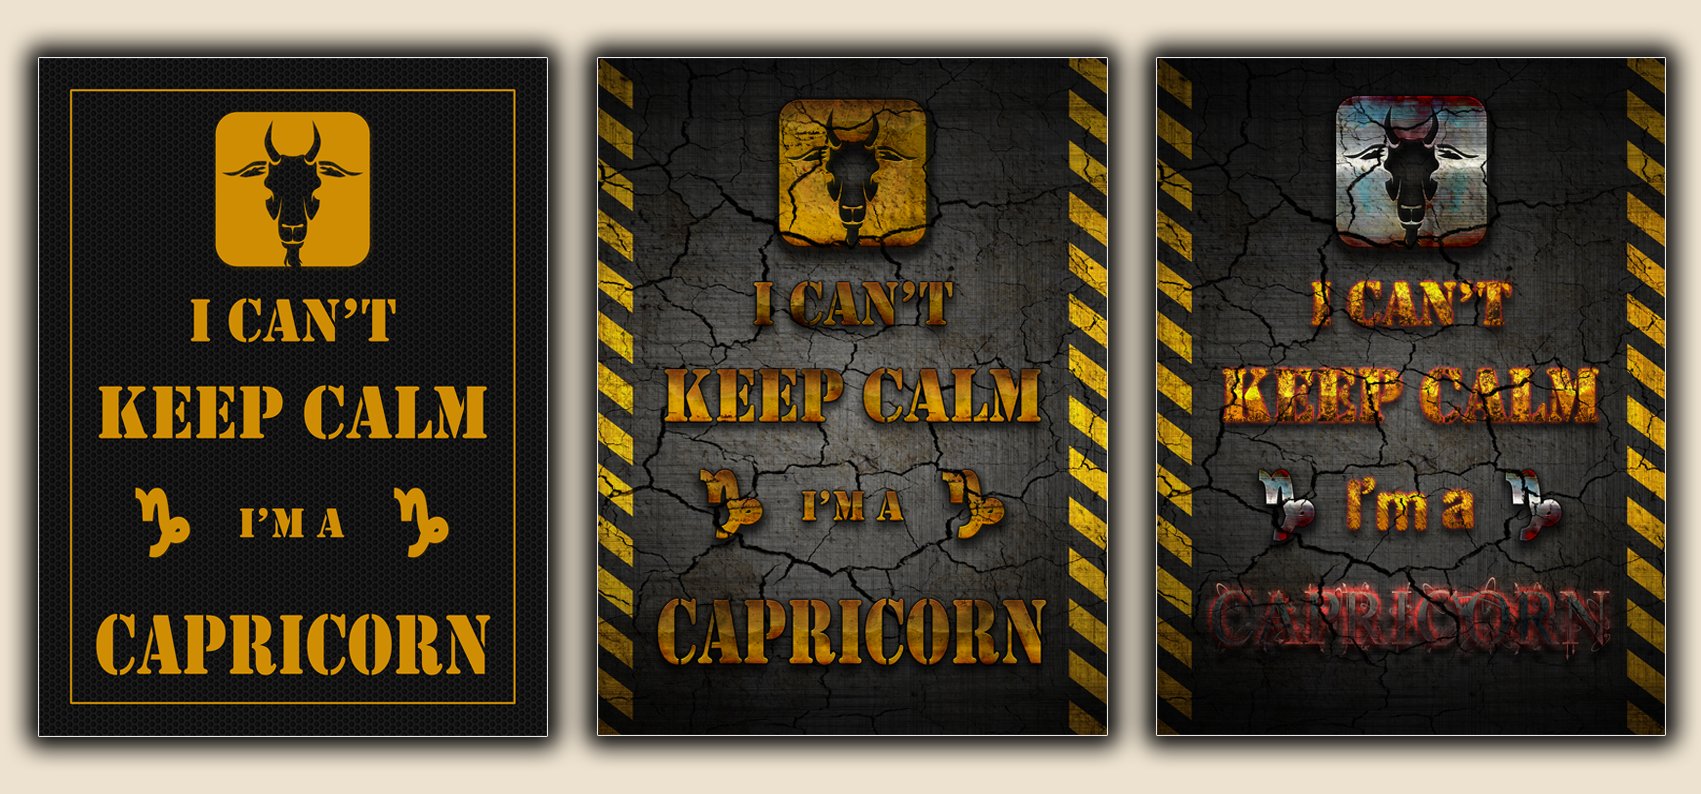 I Can't Keep Calm - I am a Capricorn